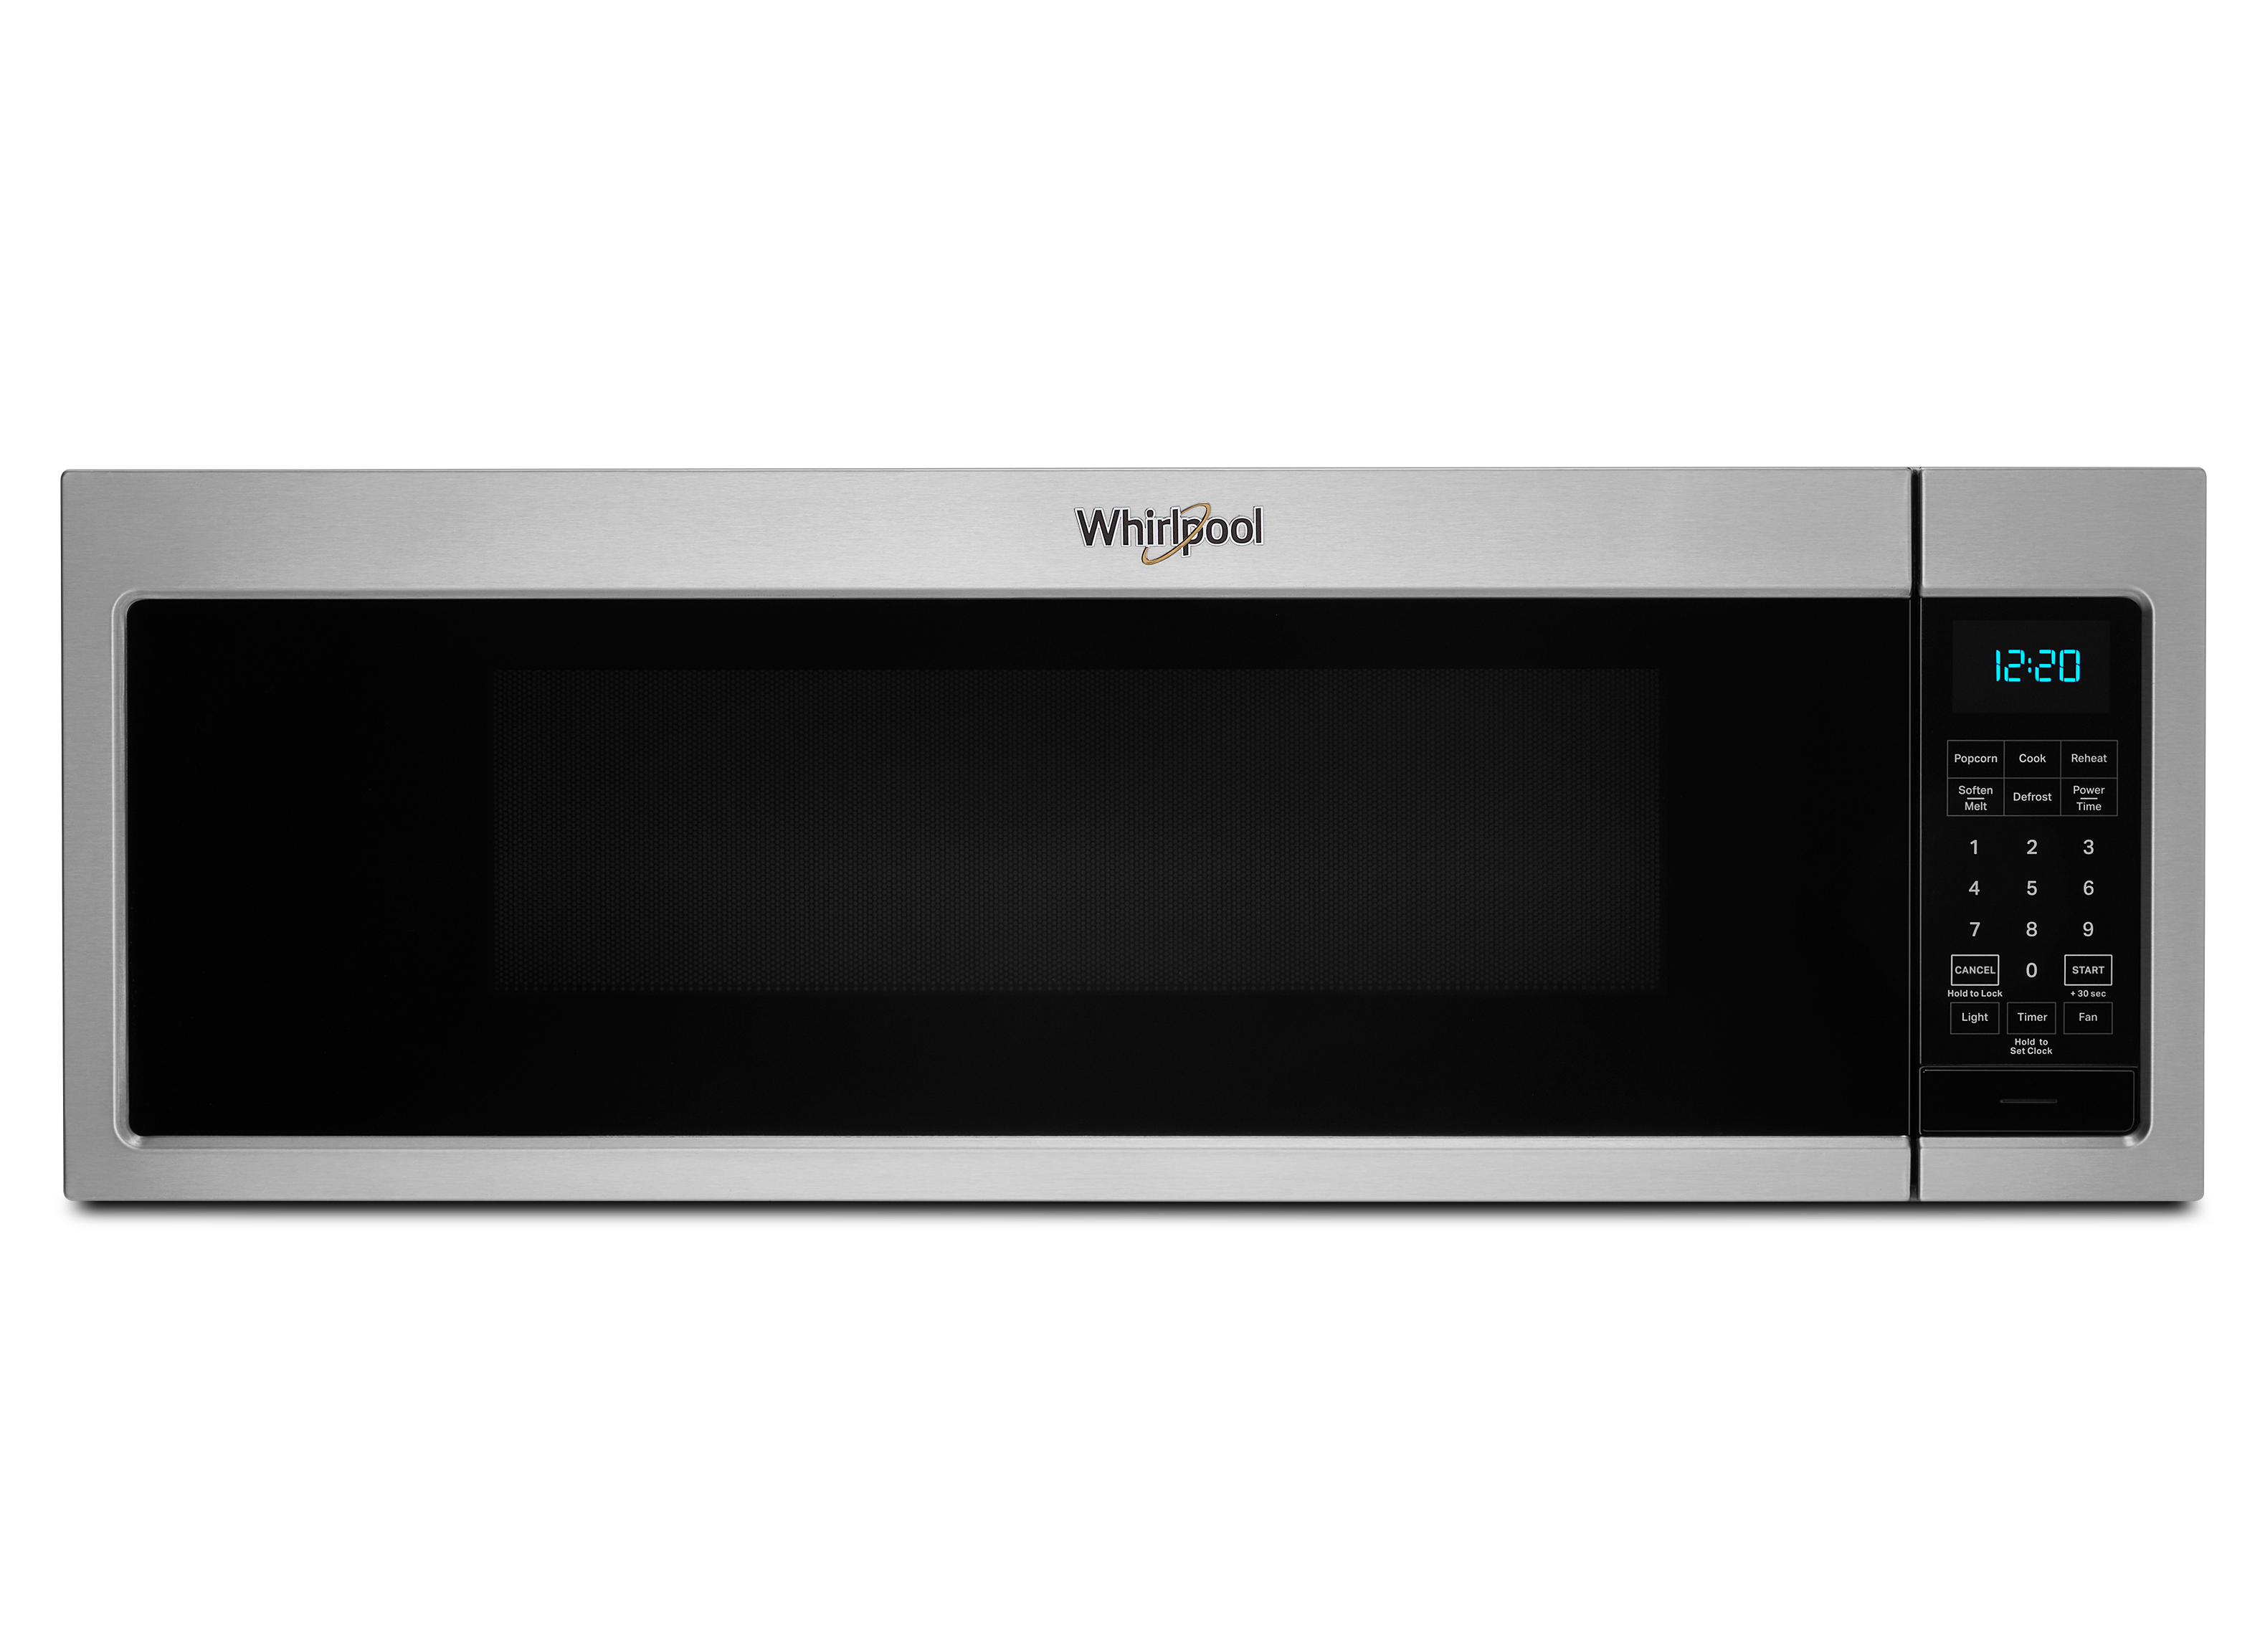 Whirlpool WML35011KS Over The Range Microwave